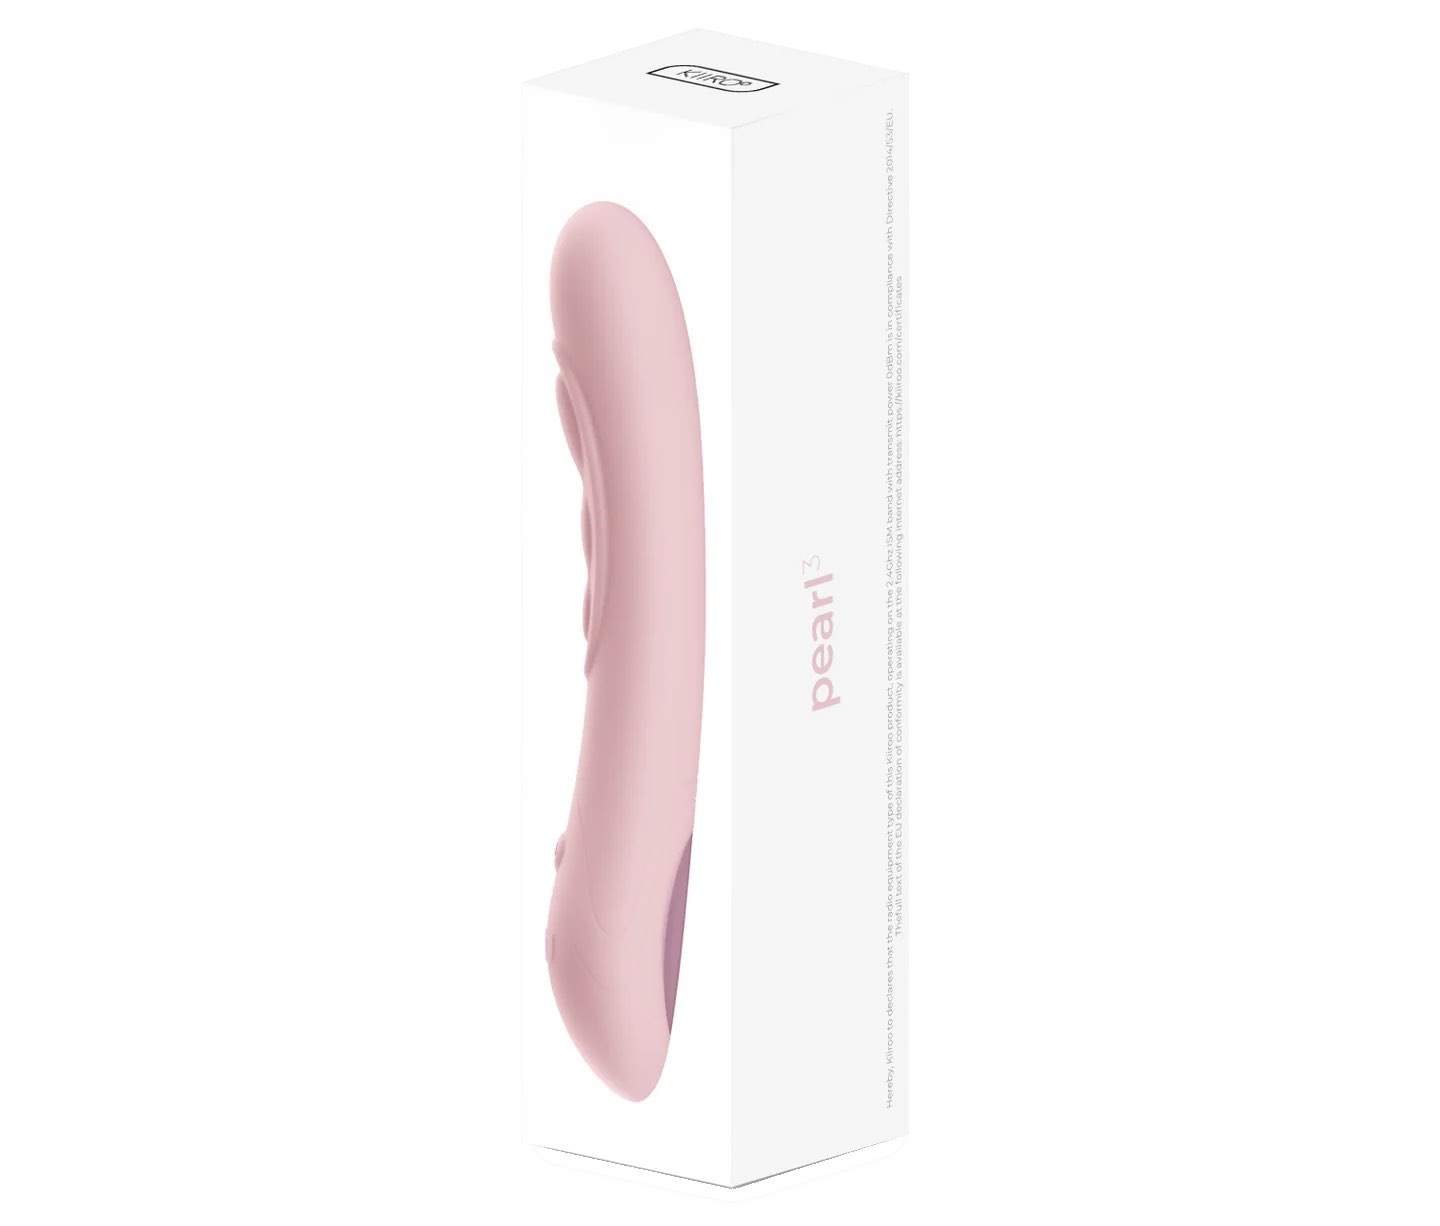 Kiiroo Pearl 3 - Interactive Sex Toys for Women